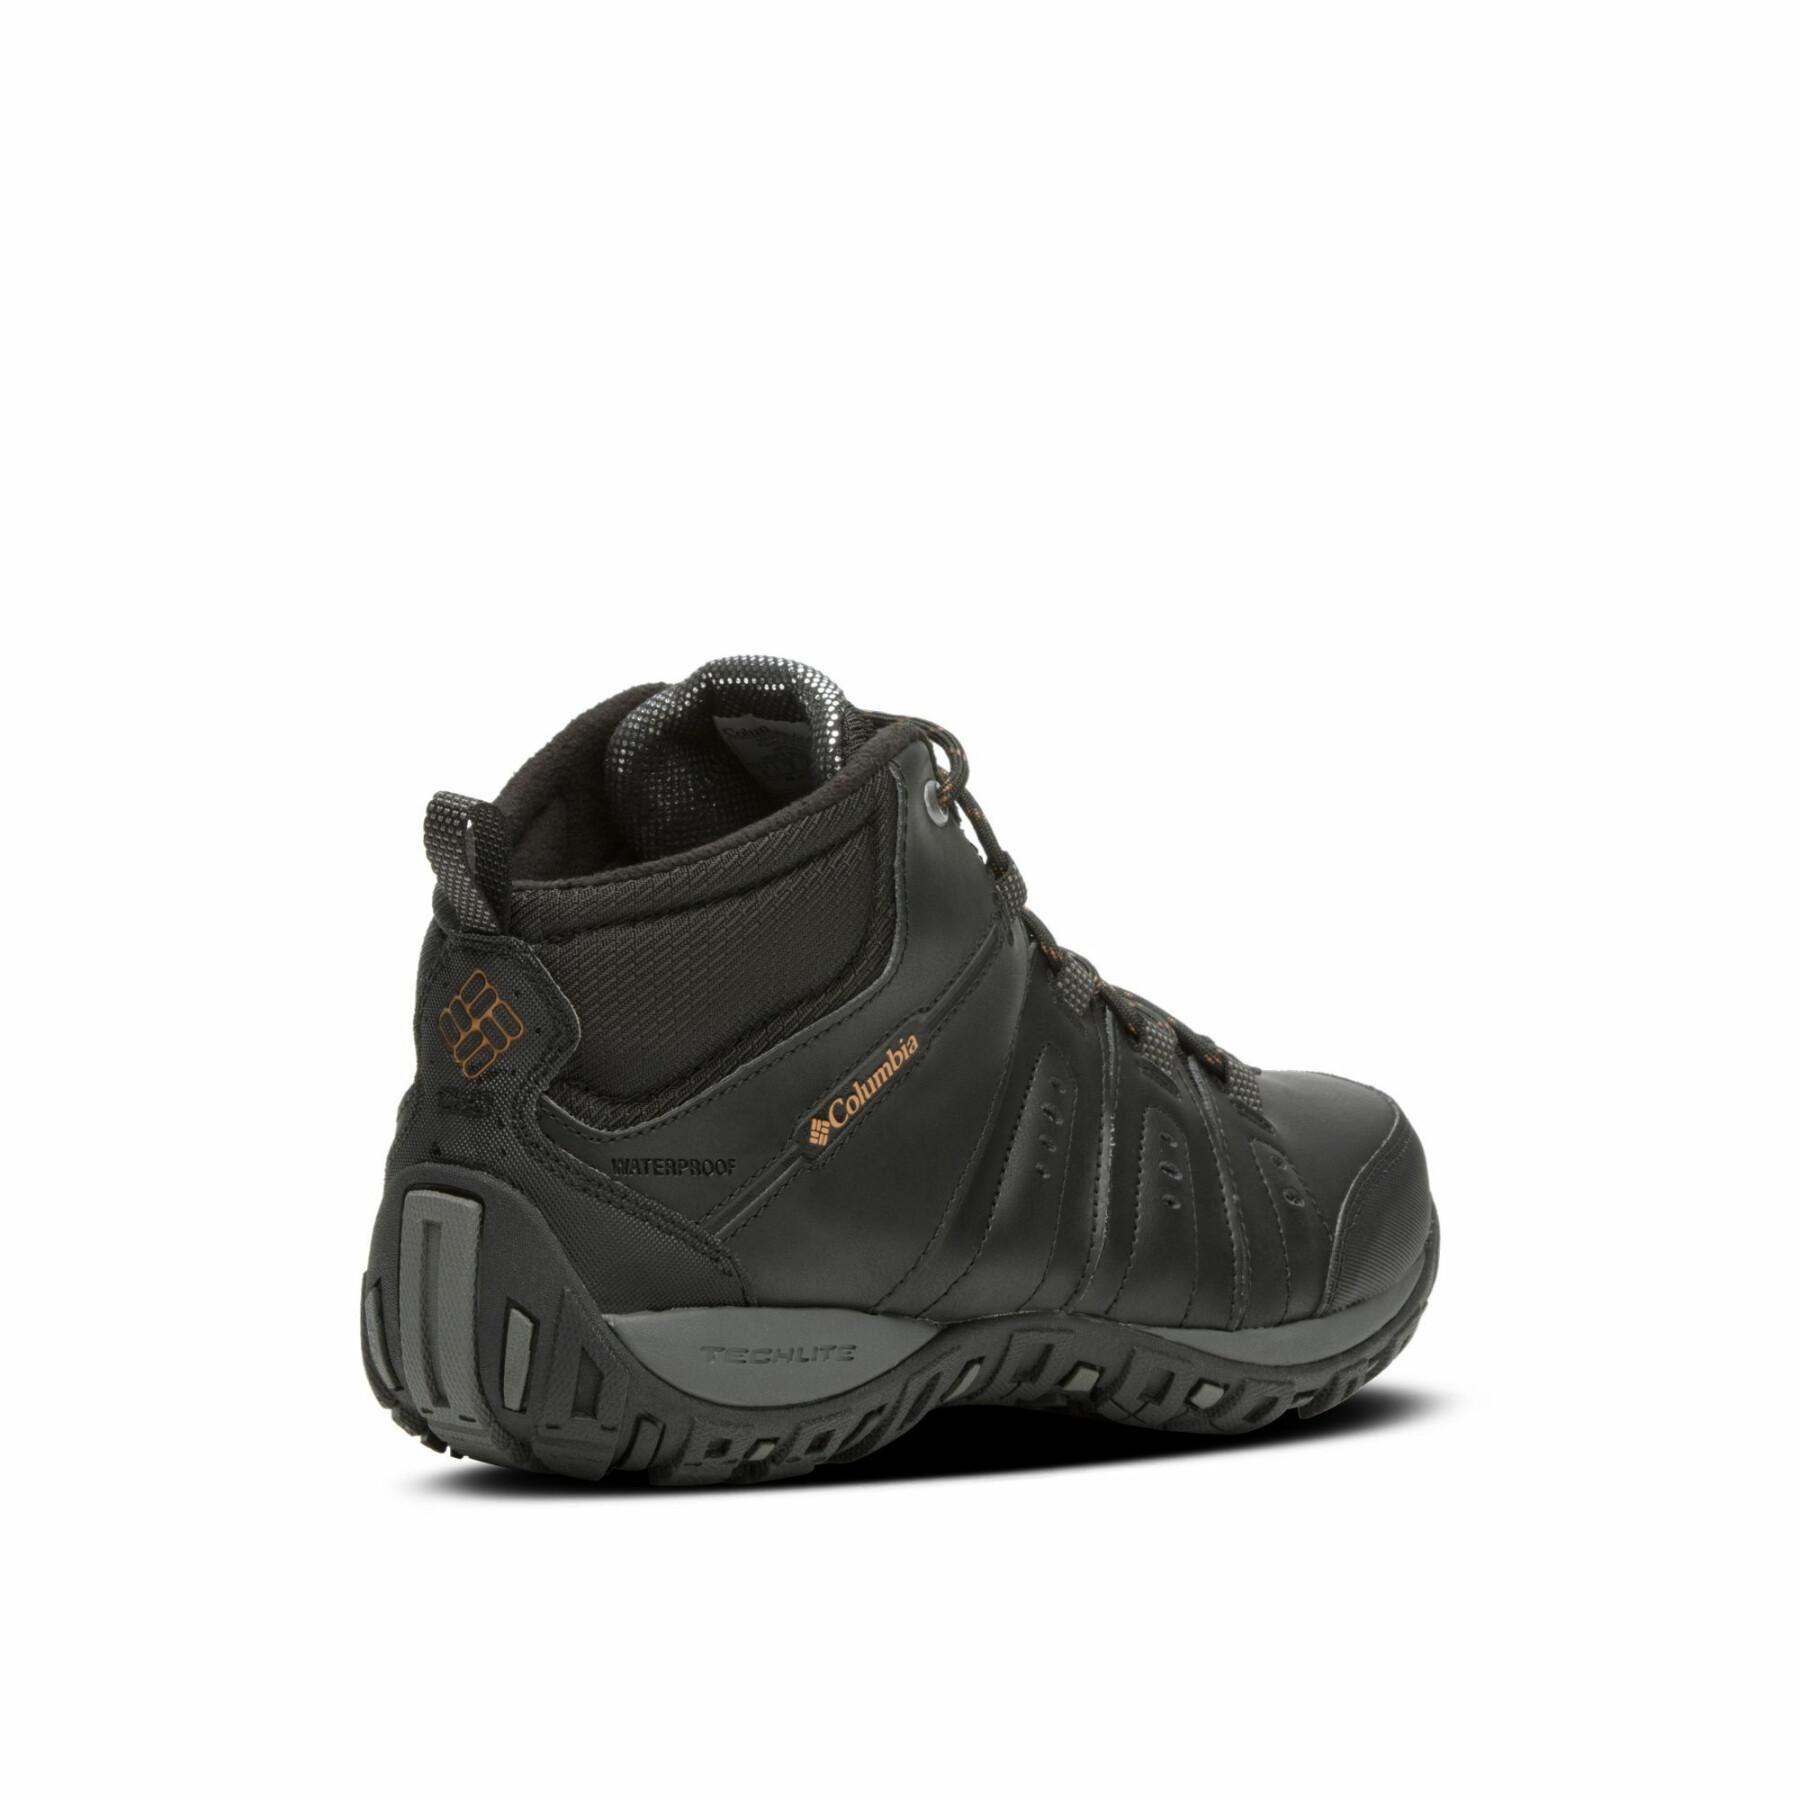 Chaussures de randonnée Columbia Chaussure Woodburn II Chukka waterproof Omni-Heat